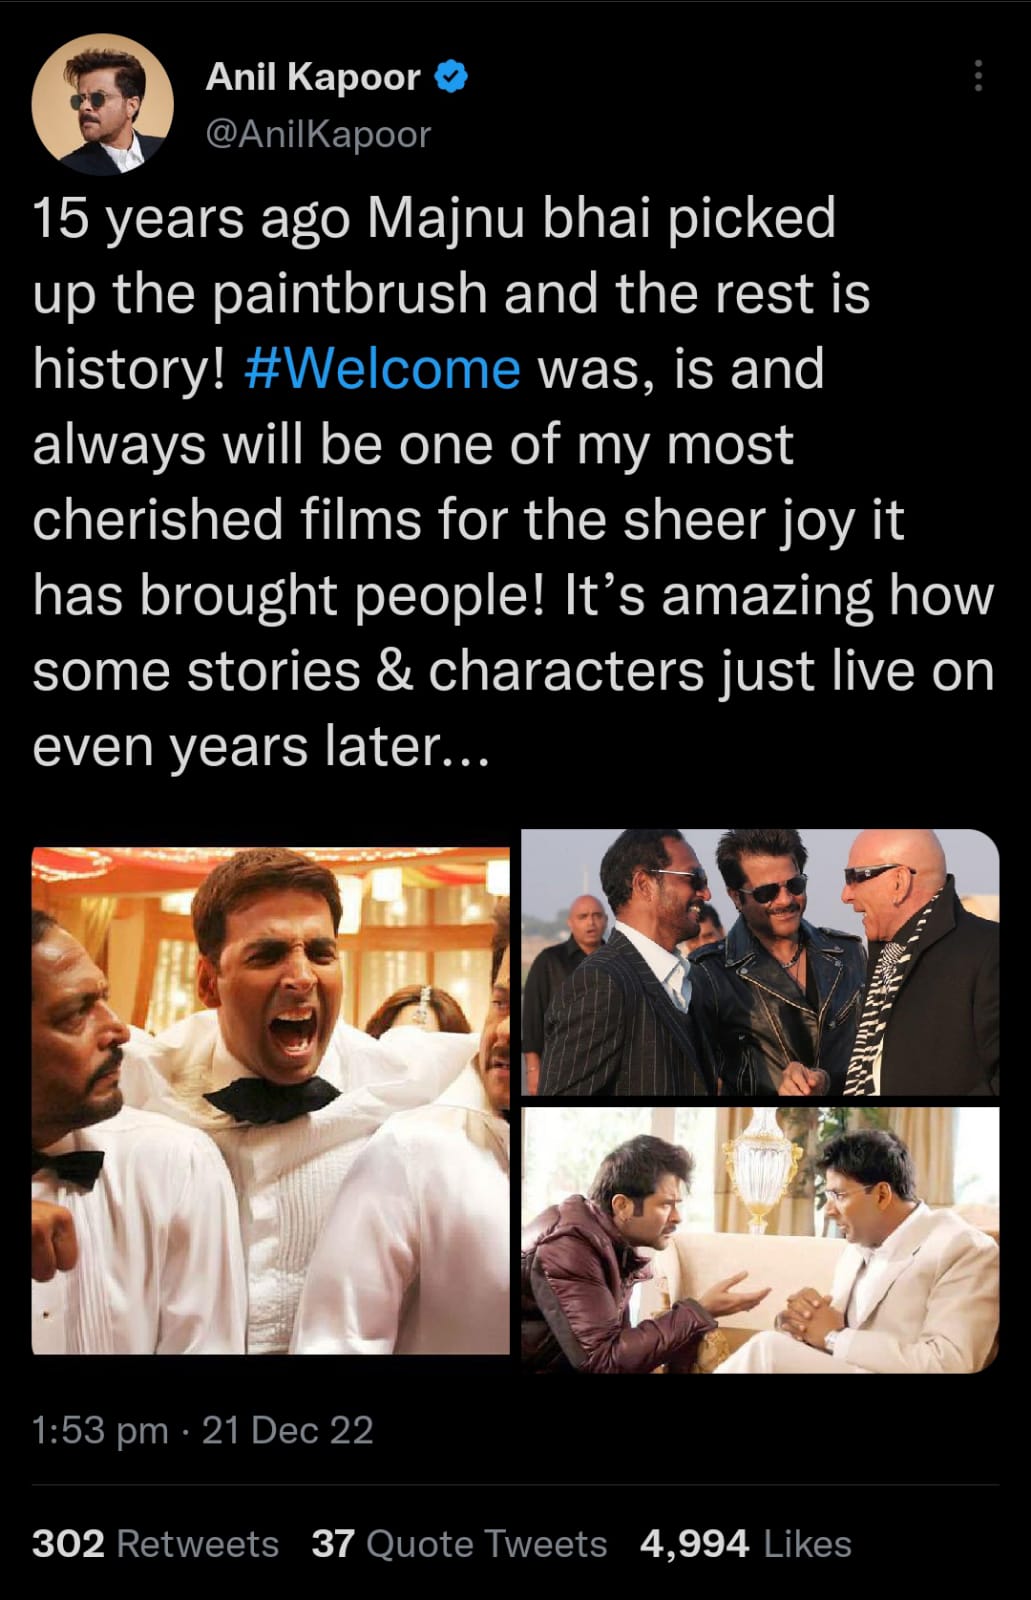 Anil Kapoor marks the 15 years of Majnu bhai